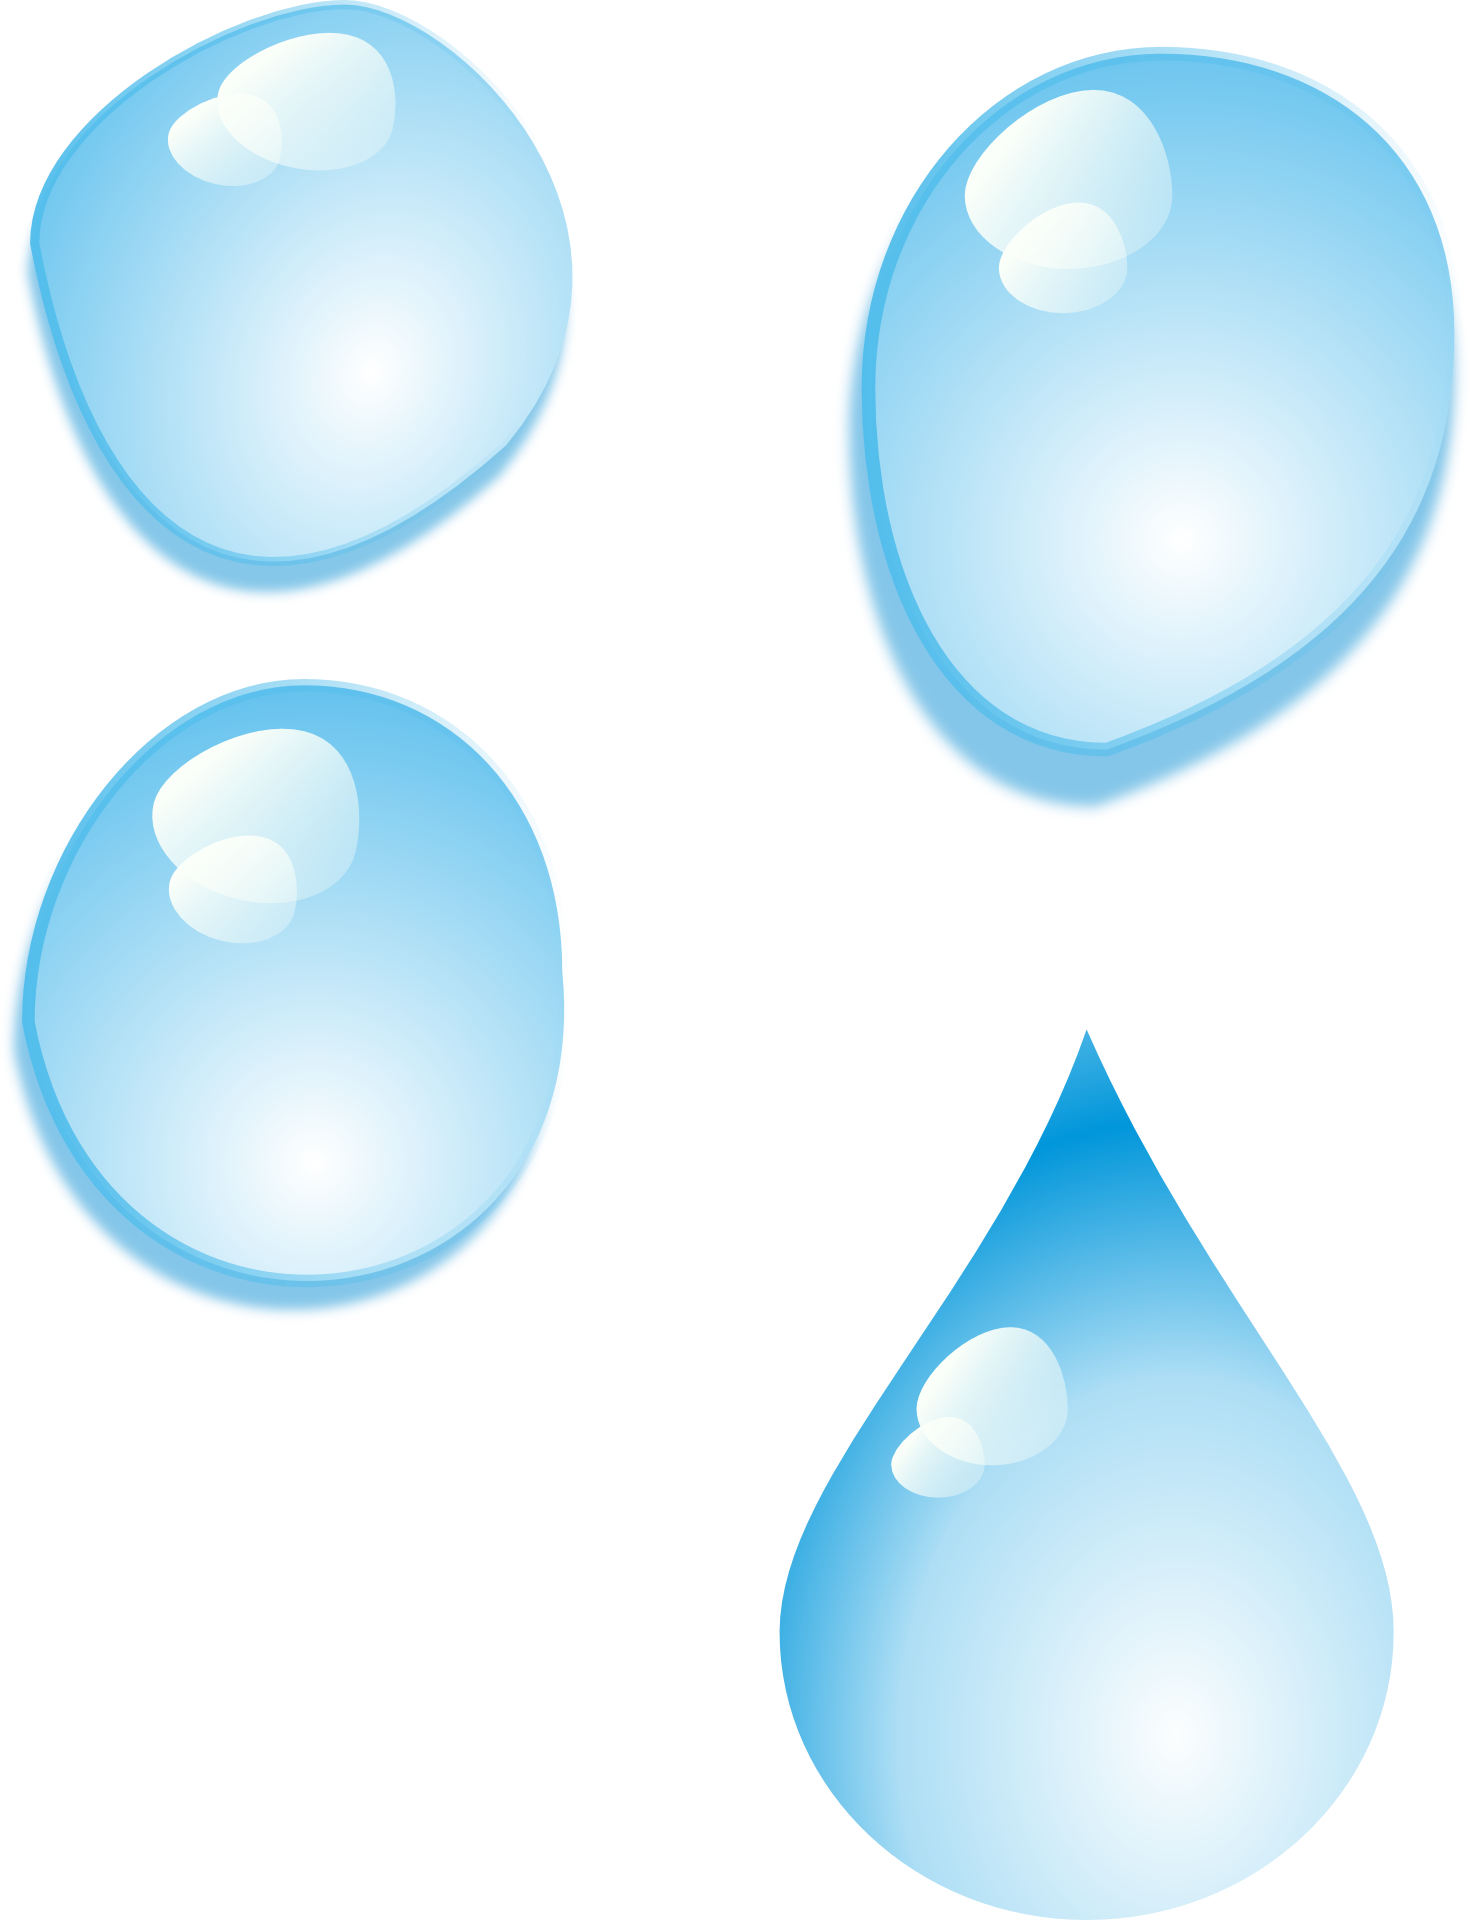 Water drop-raindrop blue cartoon vectorFree PSD,Vector,Icons,Graphics